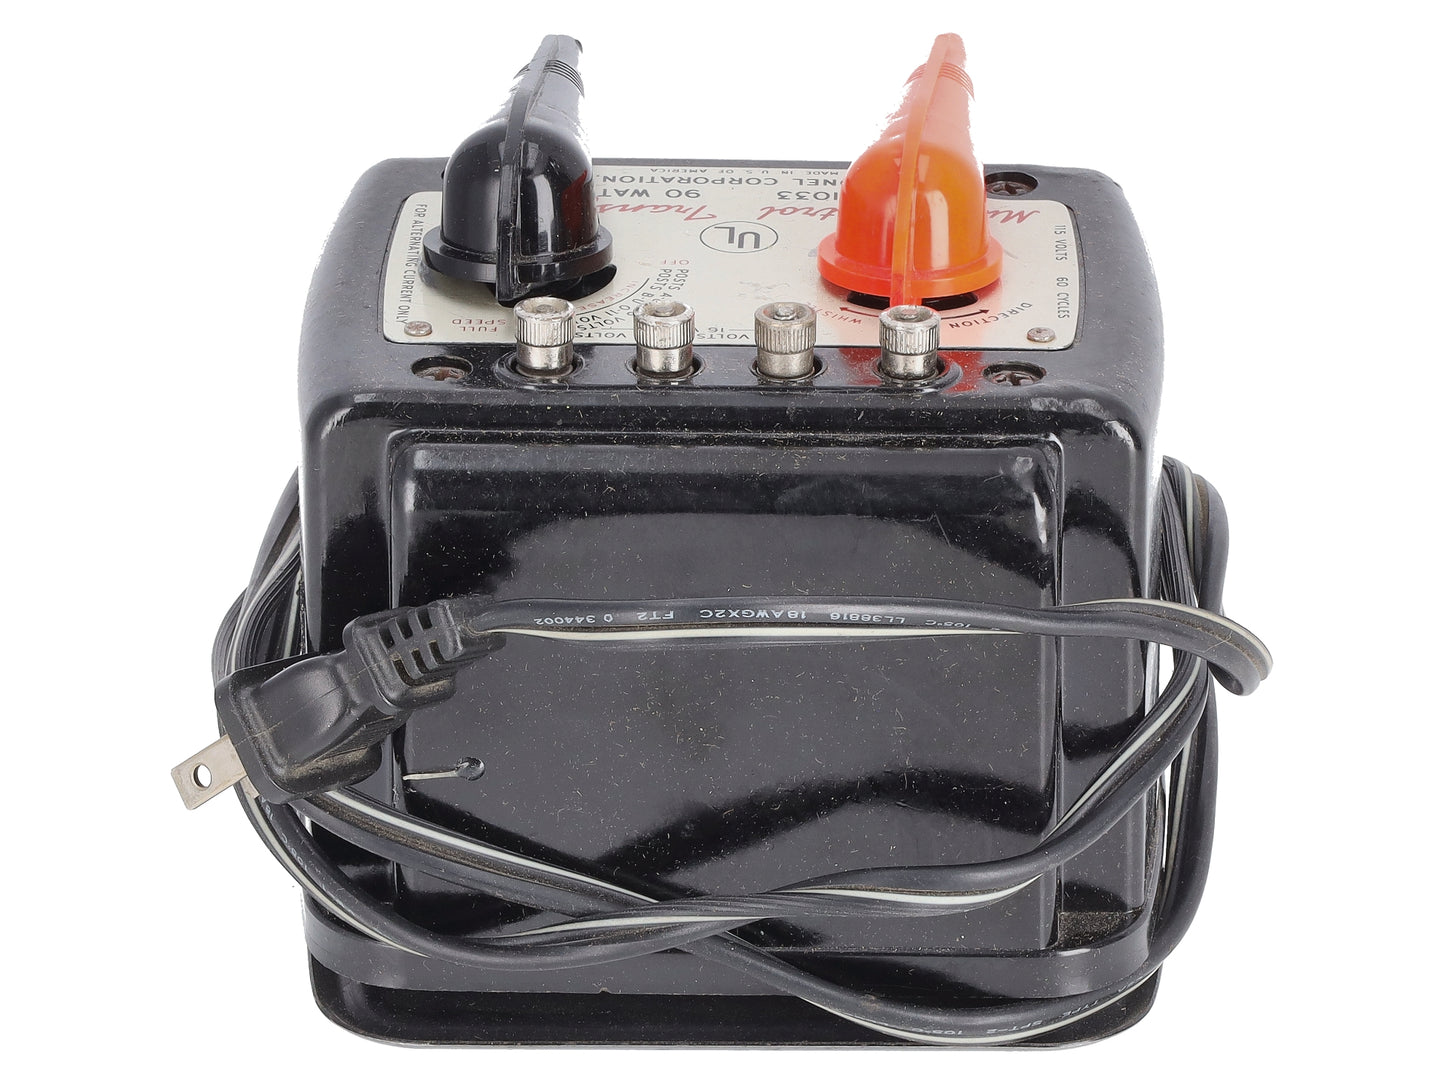 Lionel 1033 Vintage O 90 Watt Transformer w/ Whistle VG